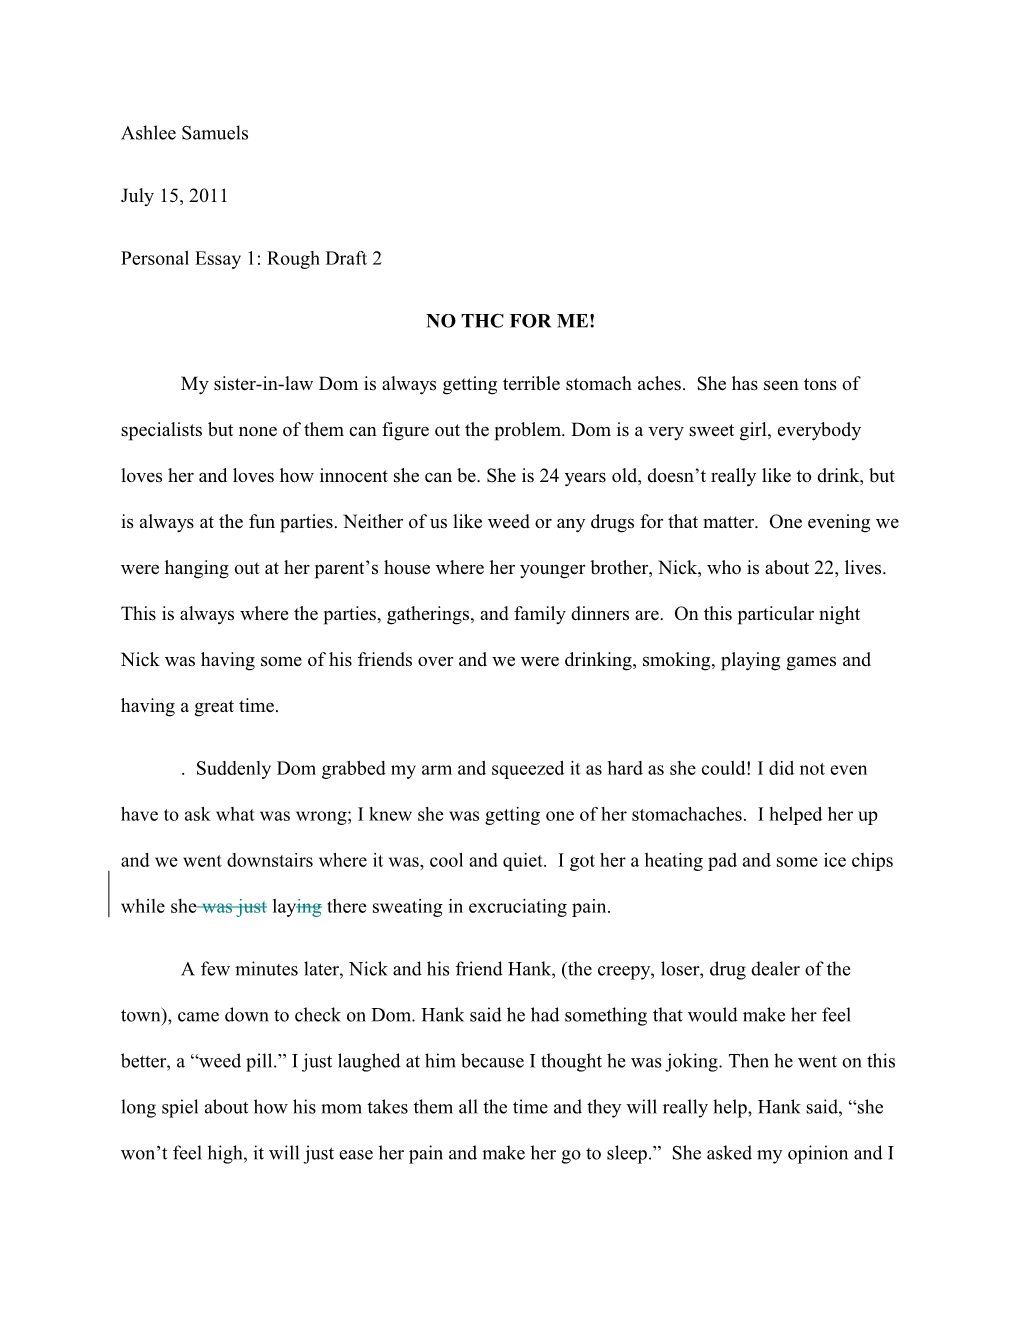 Personal Essay 1: Rough Draft 2